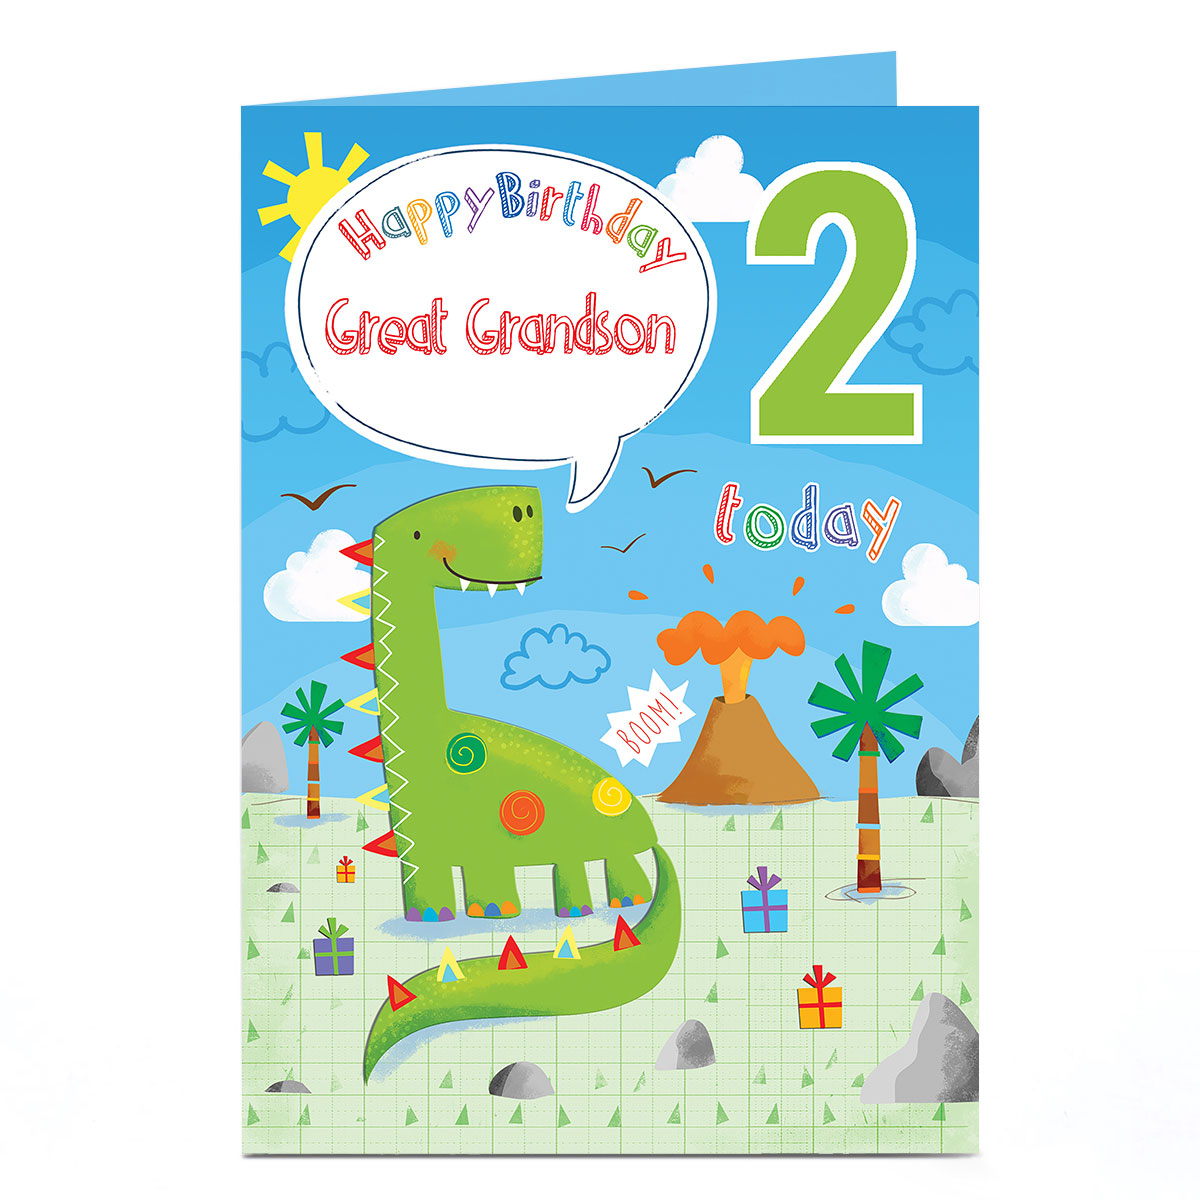 Personalised Editable Age Birthday Card - Green Dinosaur [Any recipient]